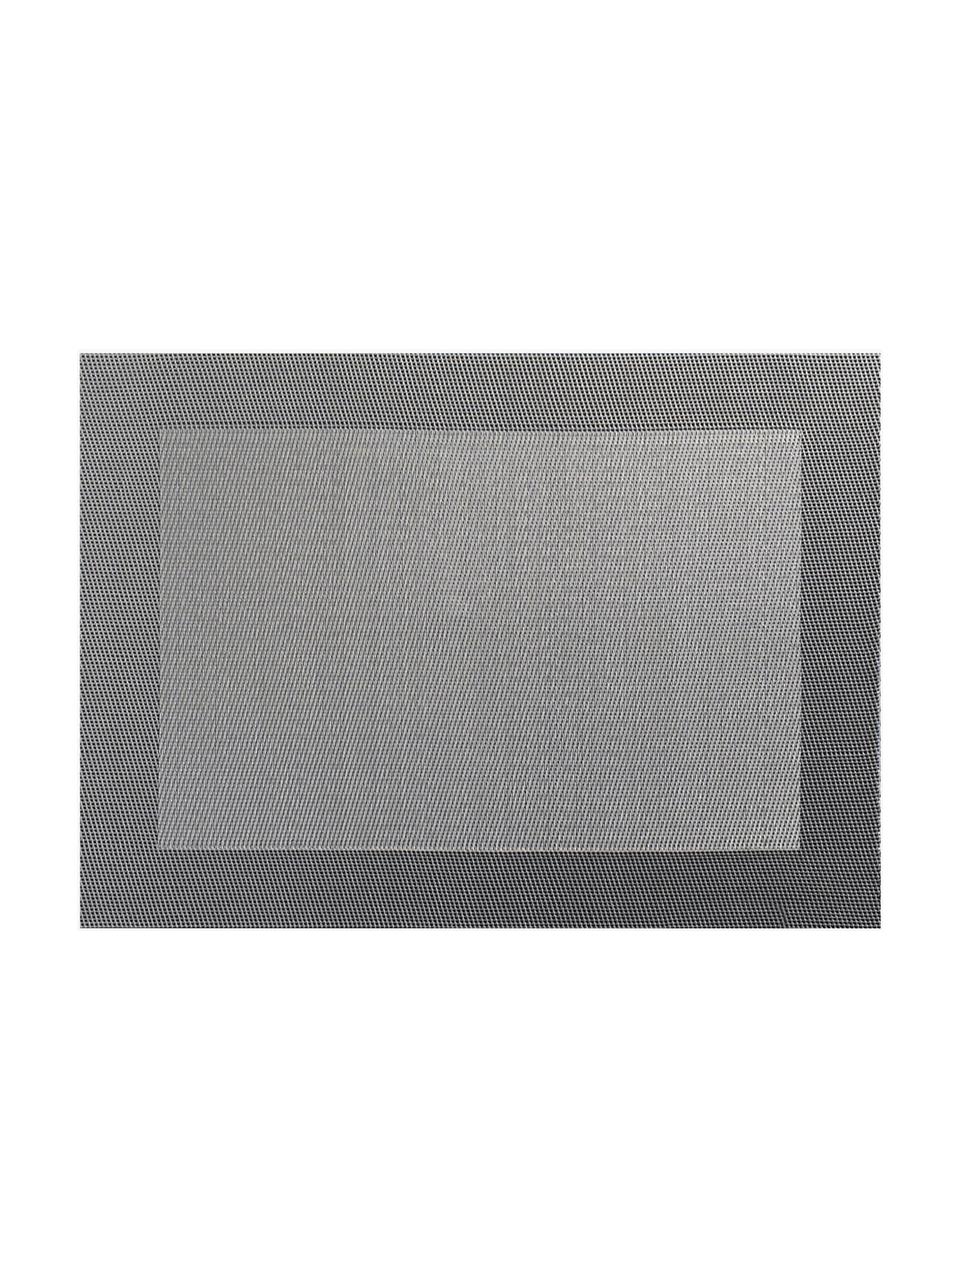 Kunststoff-Tischsets Trefl, 2 Stück, Kunststoff (PVC), Grau, B 33 x L 46 cm